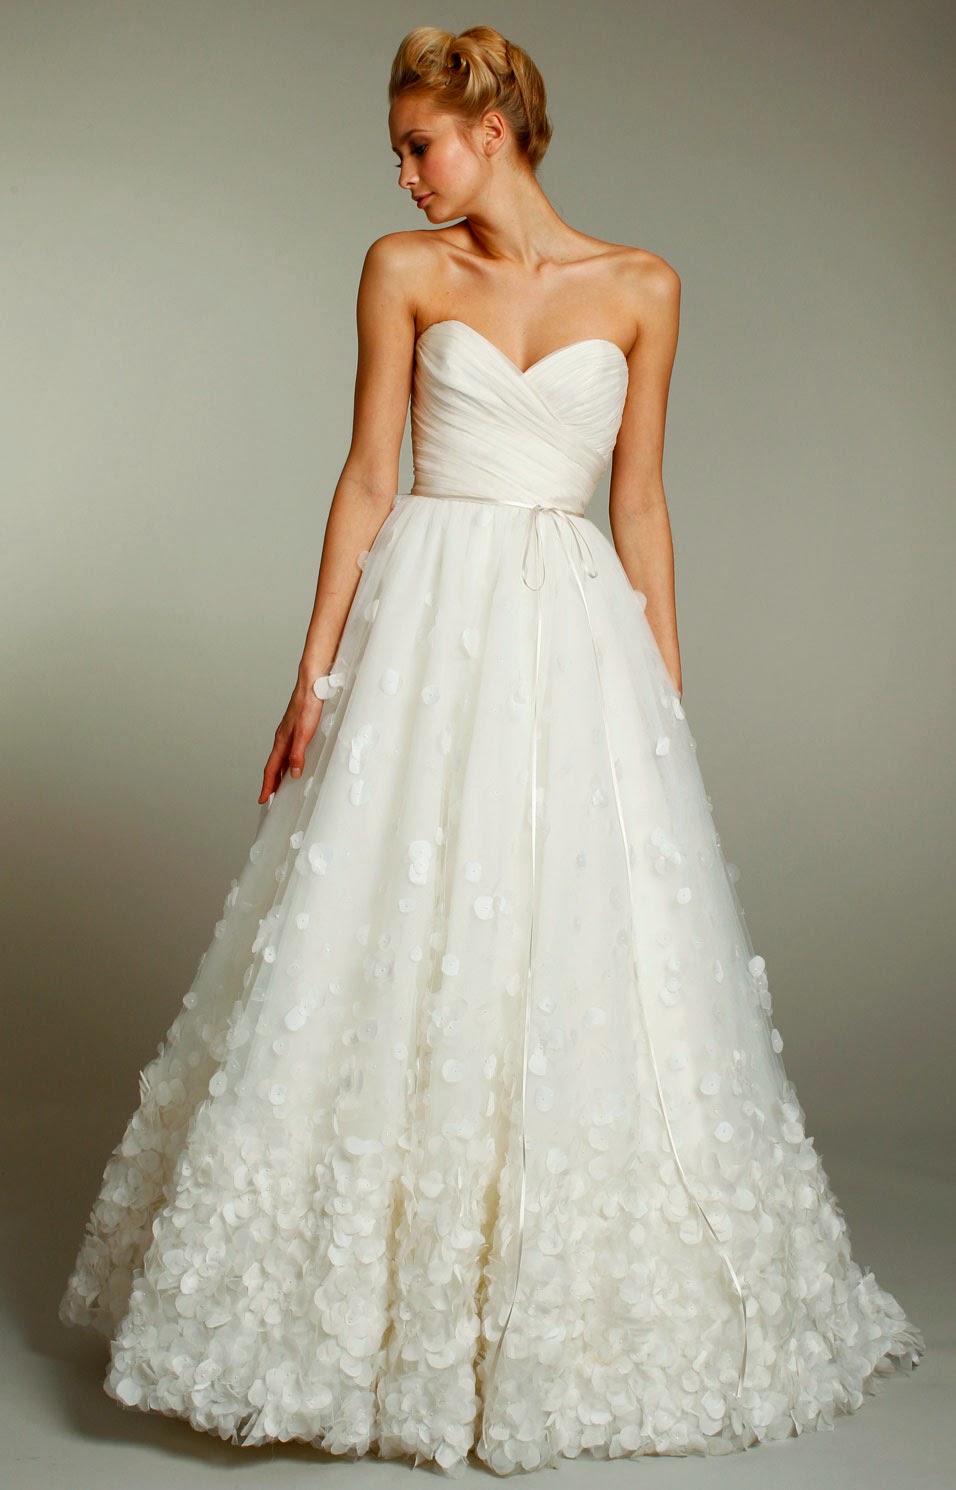 Cheap Ivory Wedding Dresses Under 100 Dollars Design Ideas